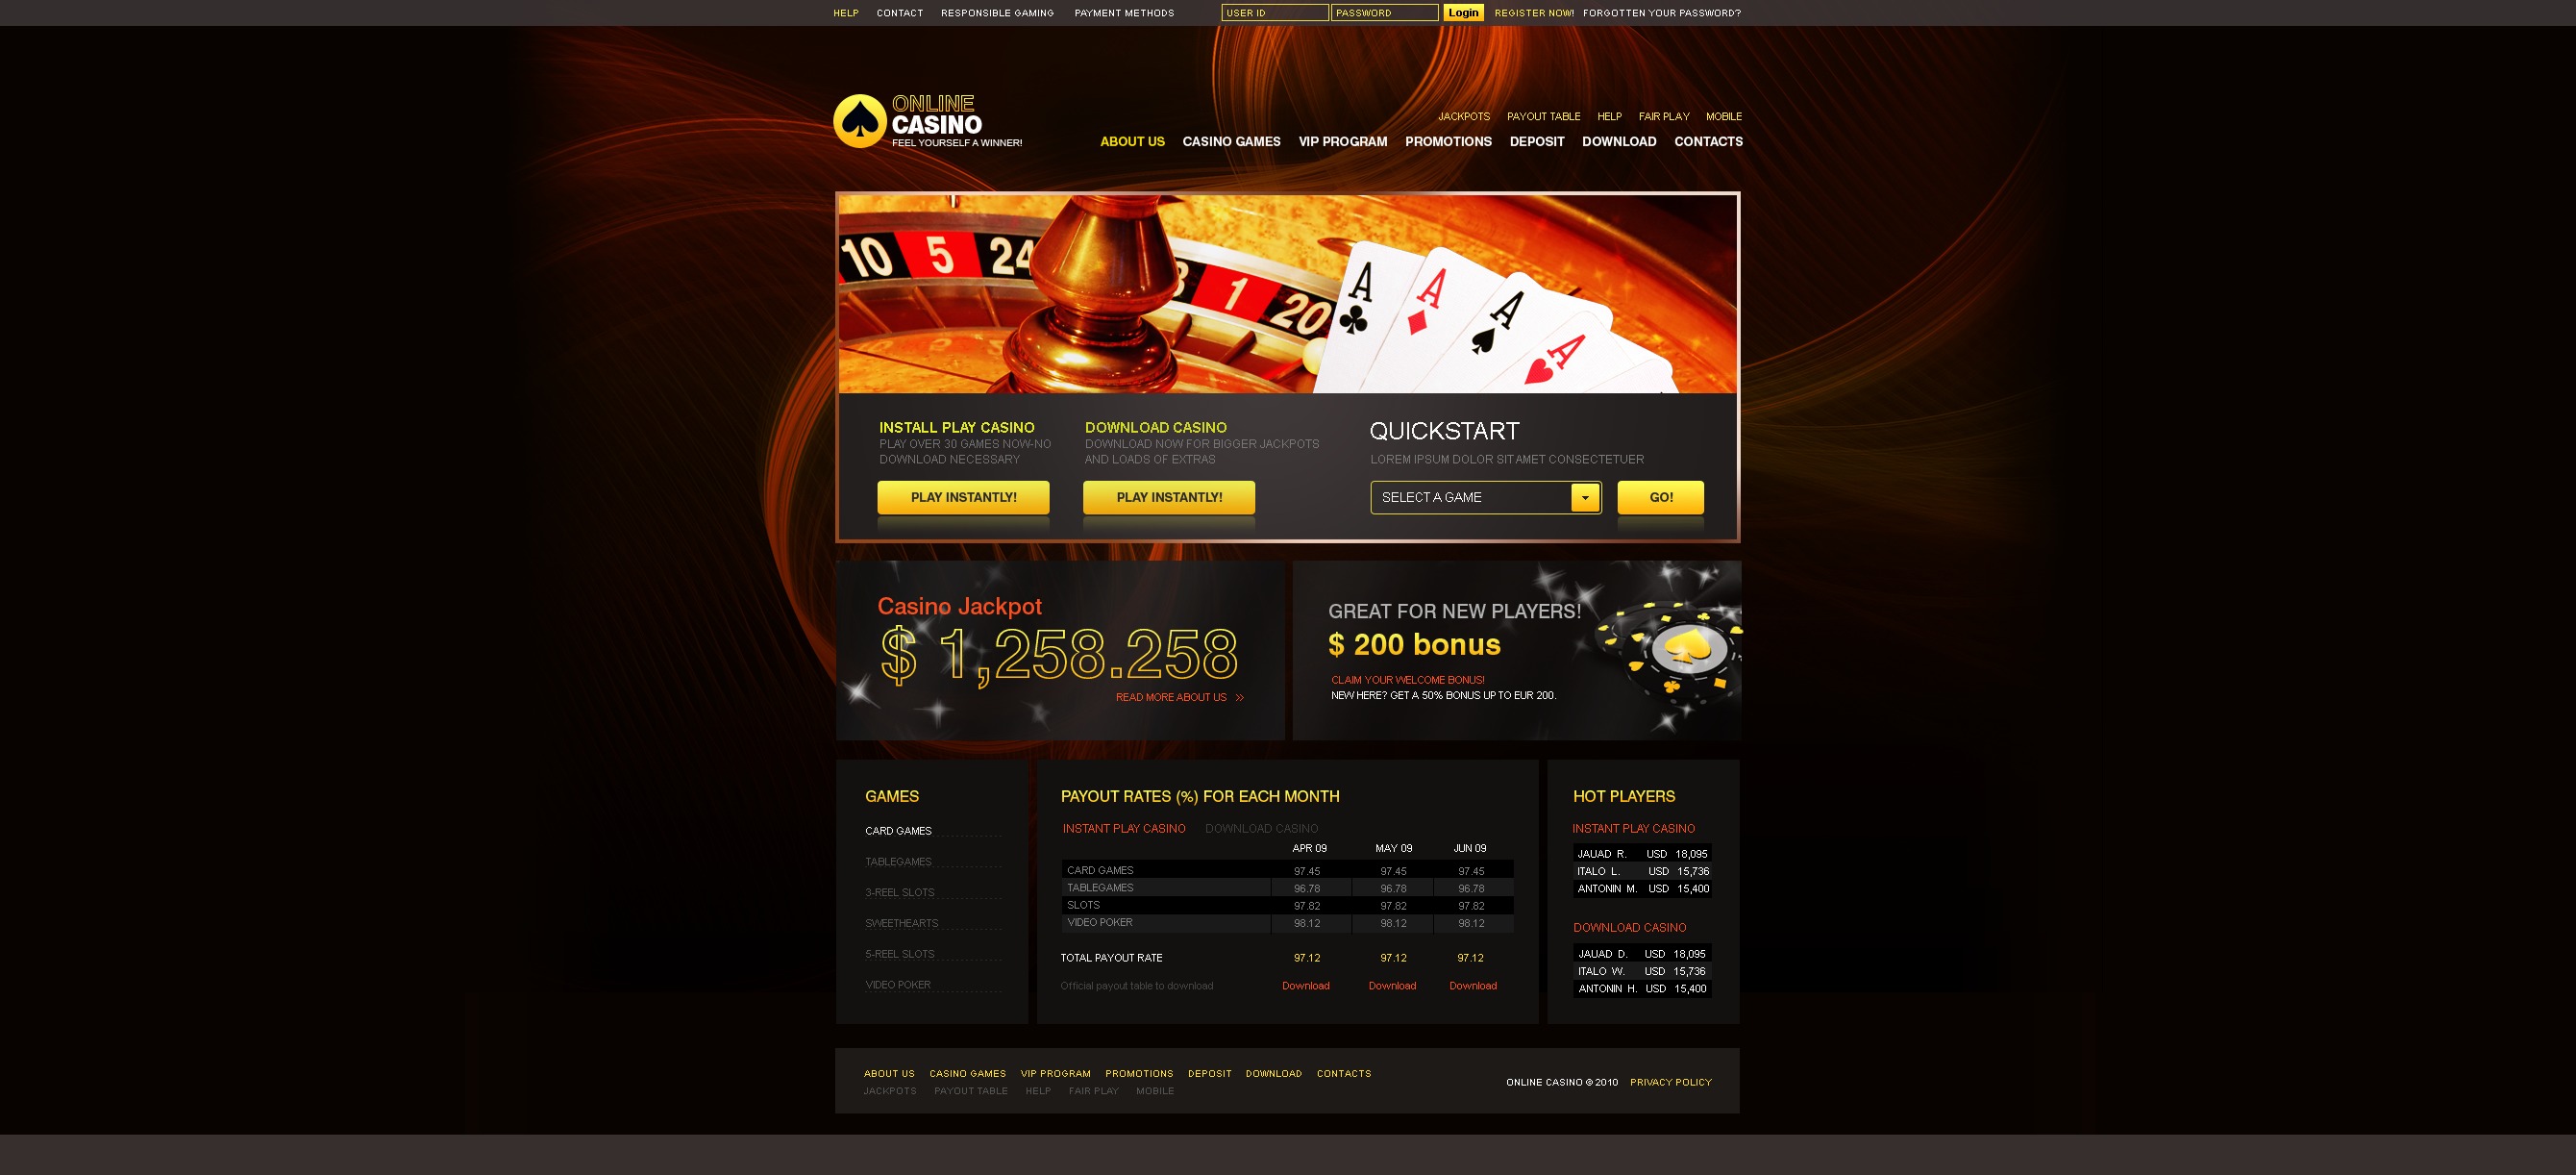 This site uses keywordluv website casino online 1win xyz официальный сайт